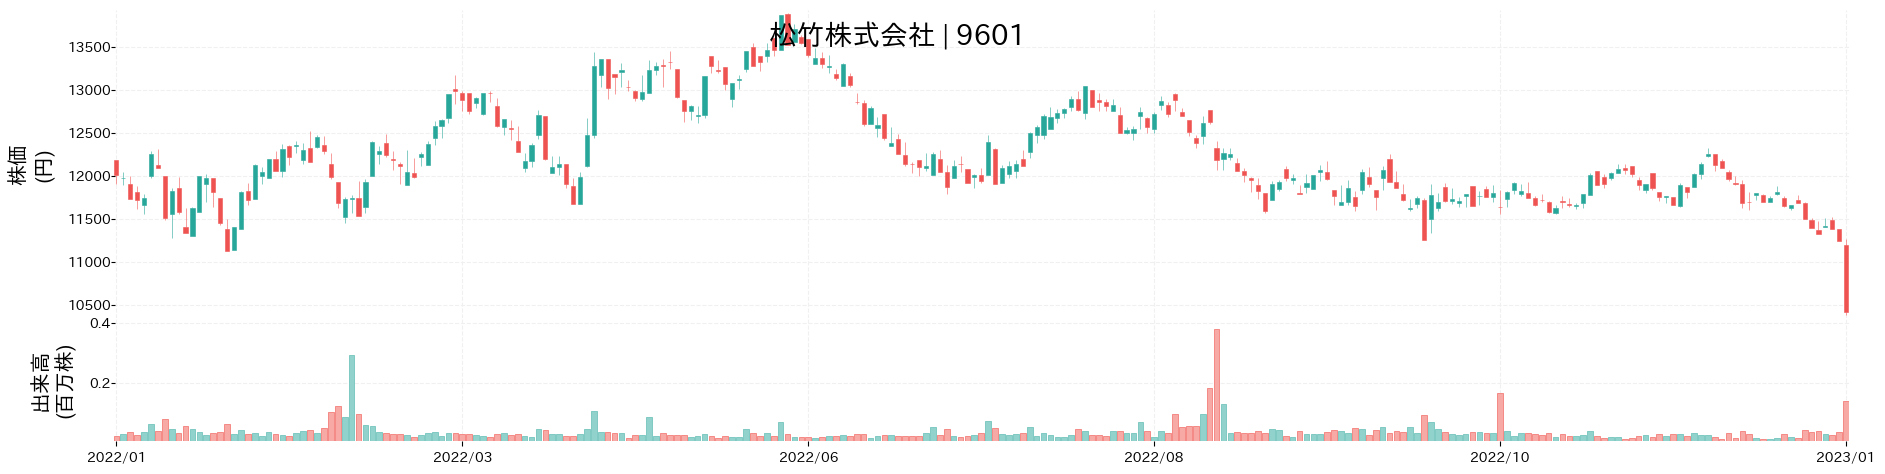 松竹の株価推移(2022)